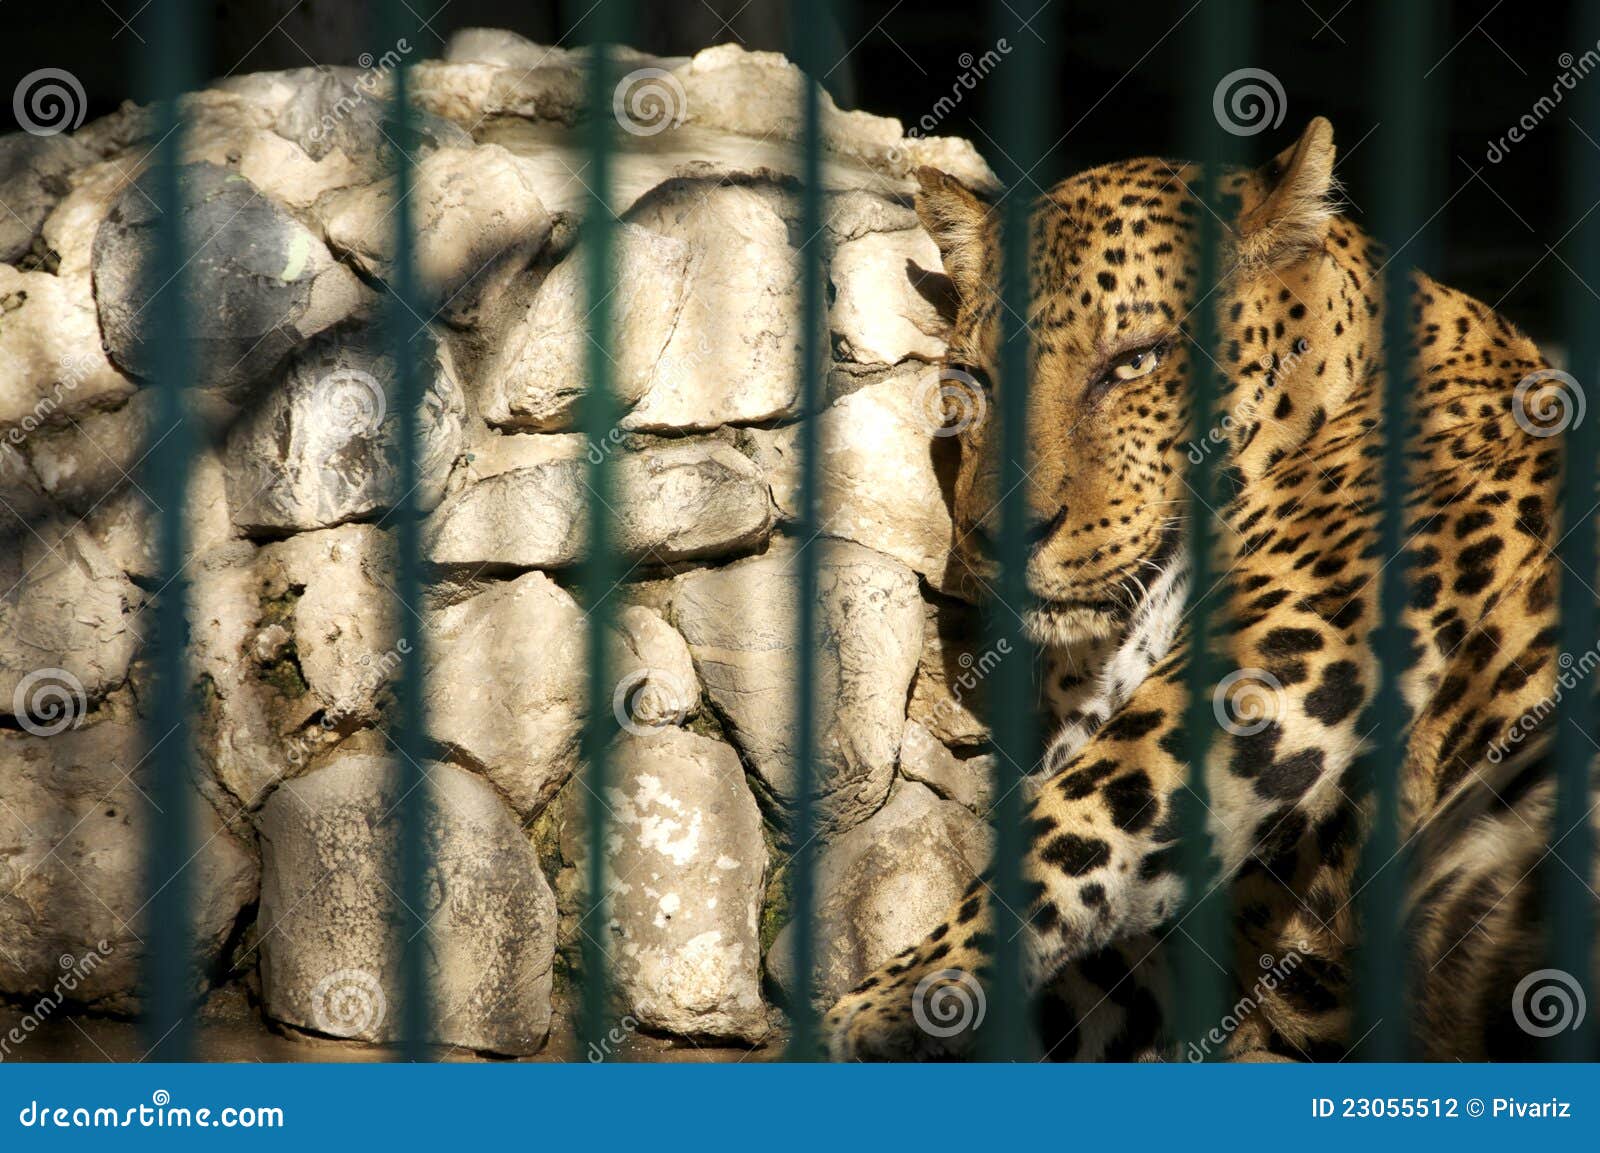 leopard in captivity